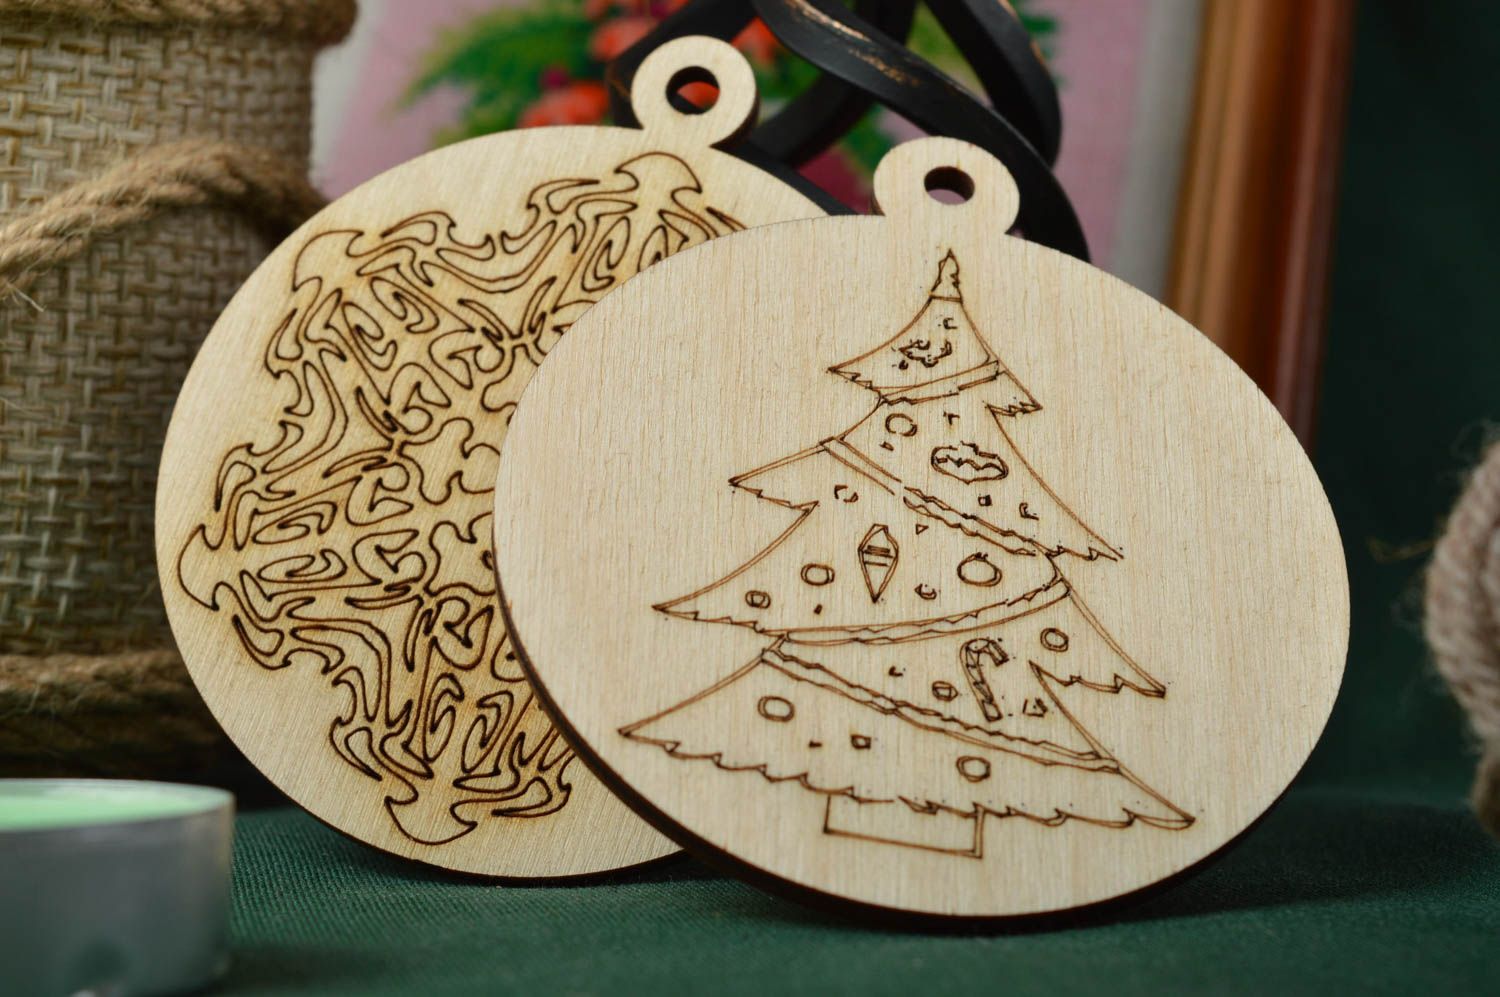 Handmade plywood blanks creative work ideas wood craft supplies 2 pieces photo 1